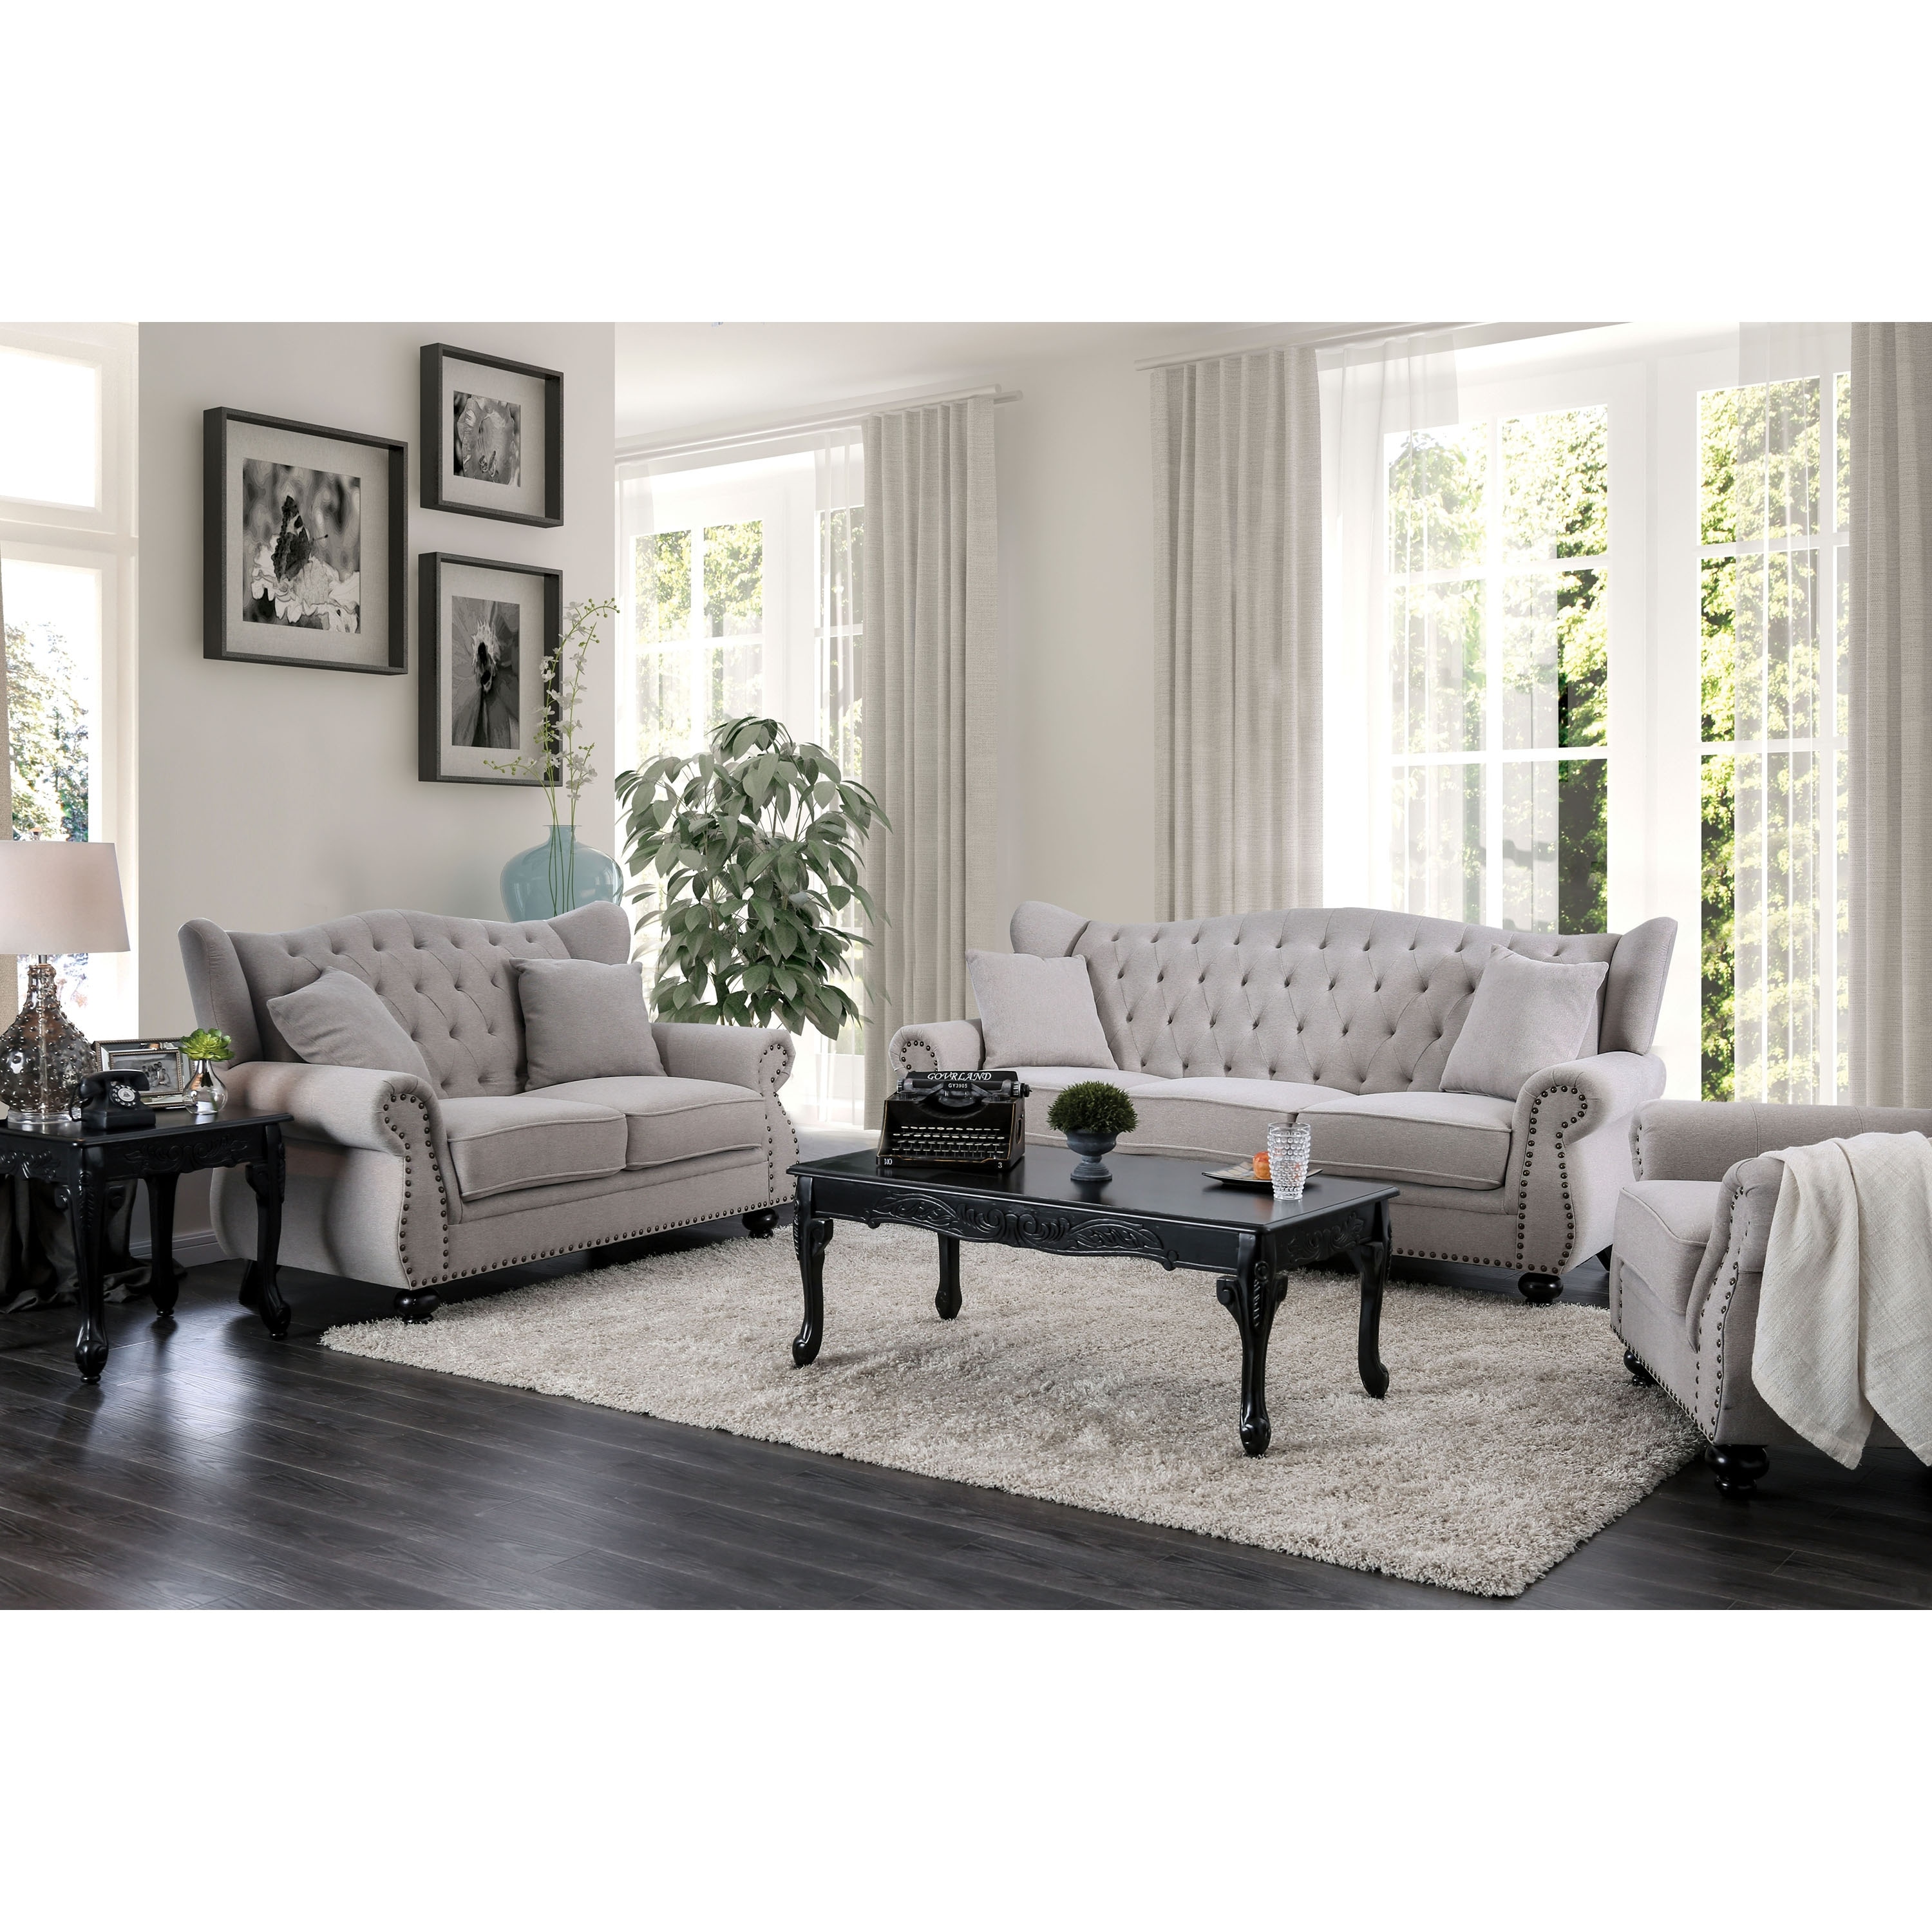 Furniture Of America Bennett 2 Piece Tufted Living Room Set On Sale Overstock 28408009